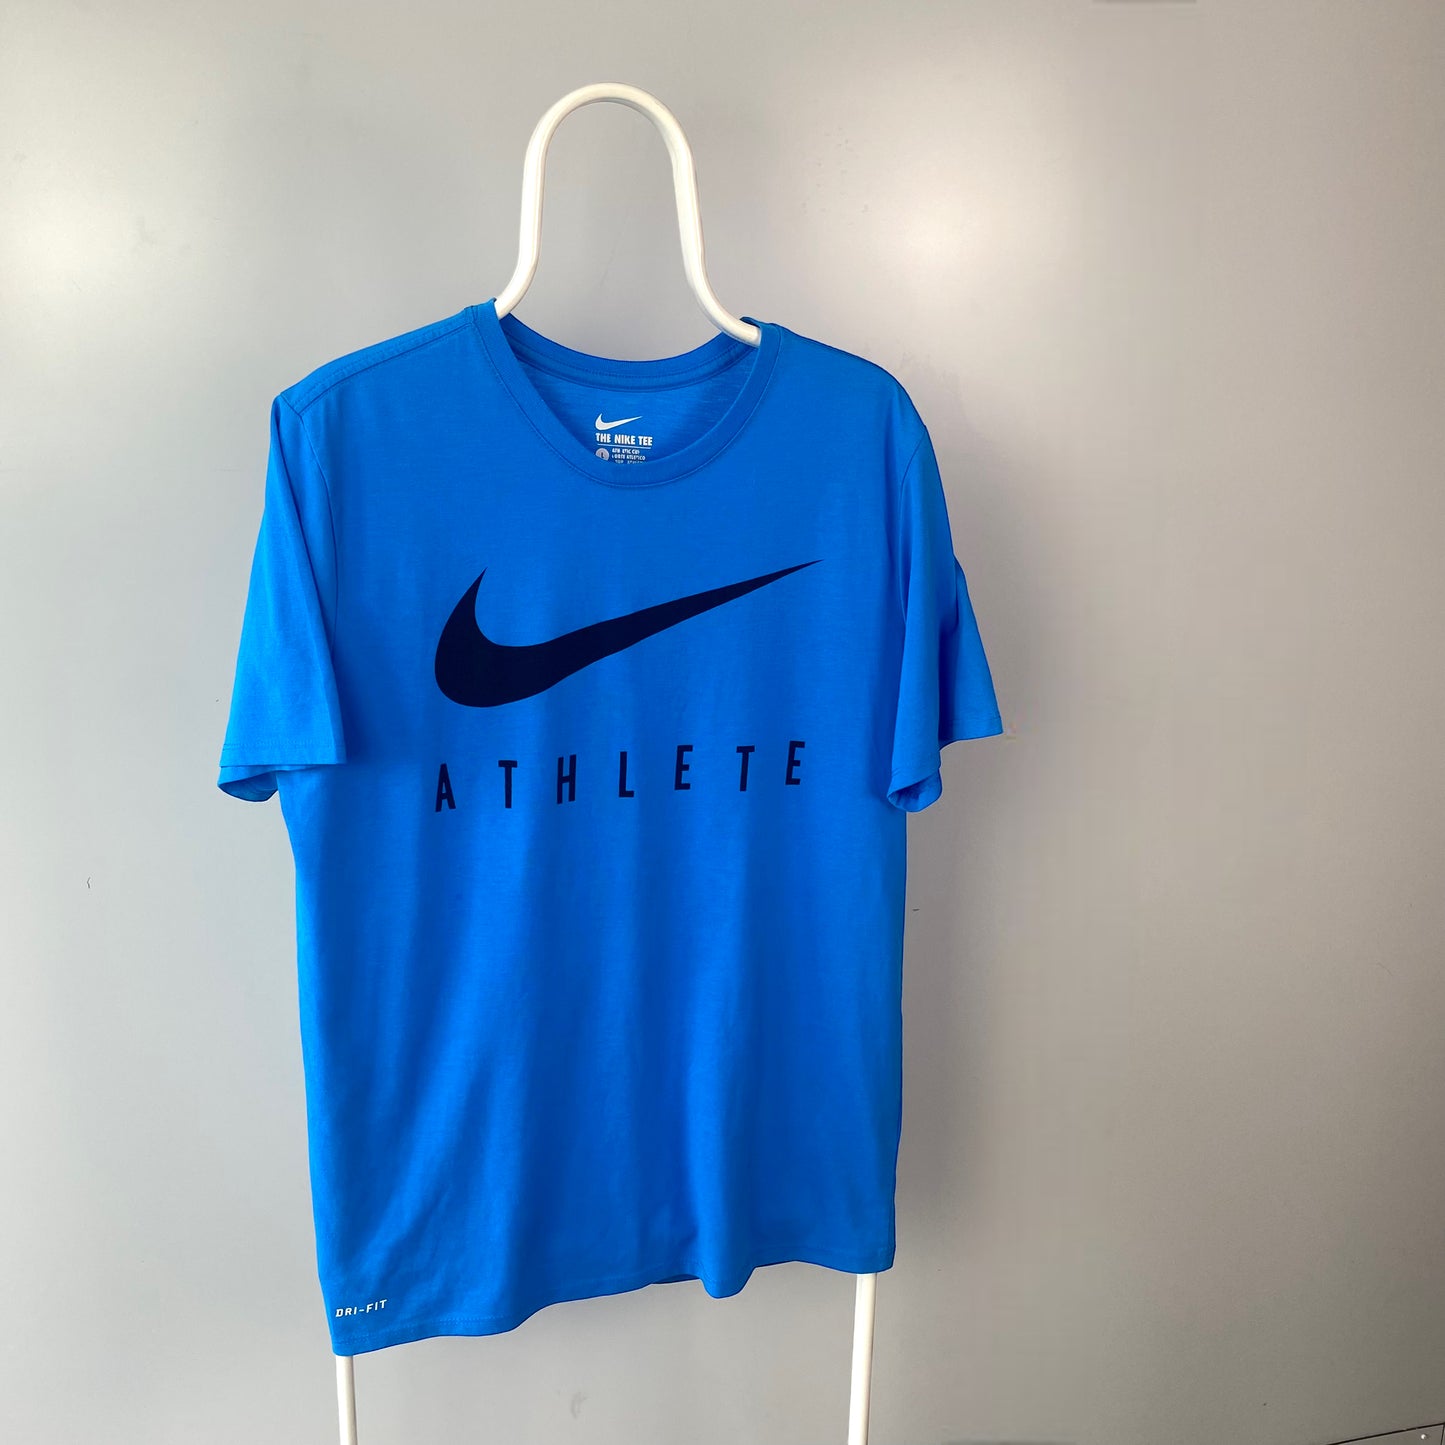 Vintage Nike Athlete Spellout Print T-Shirt [L]